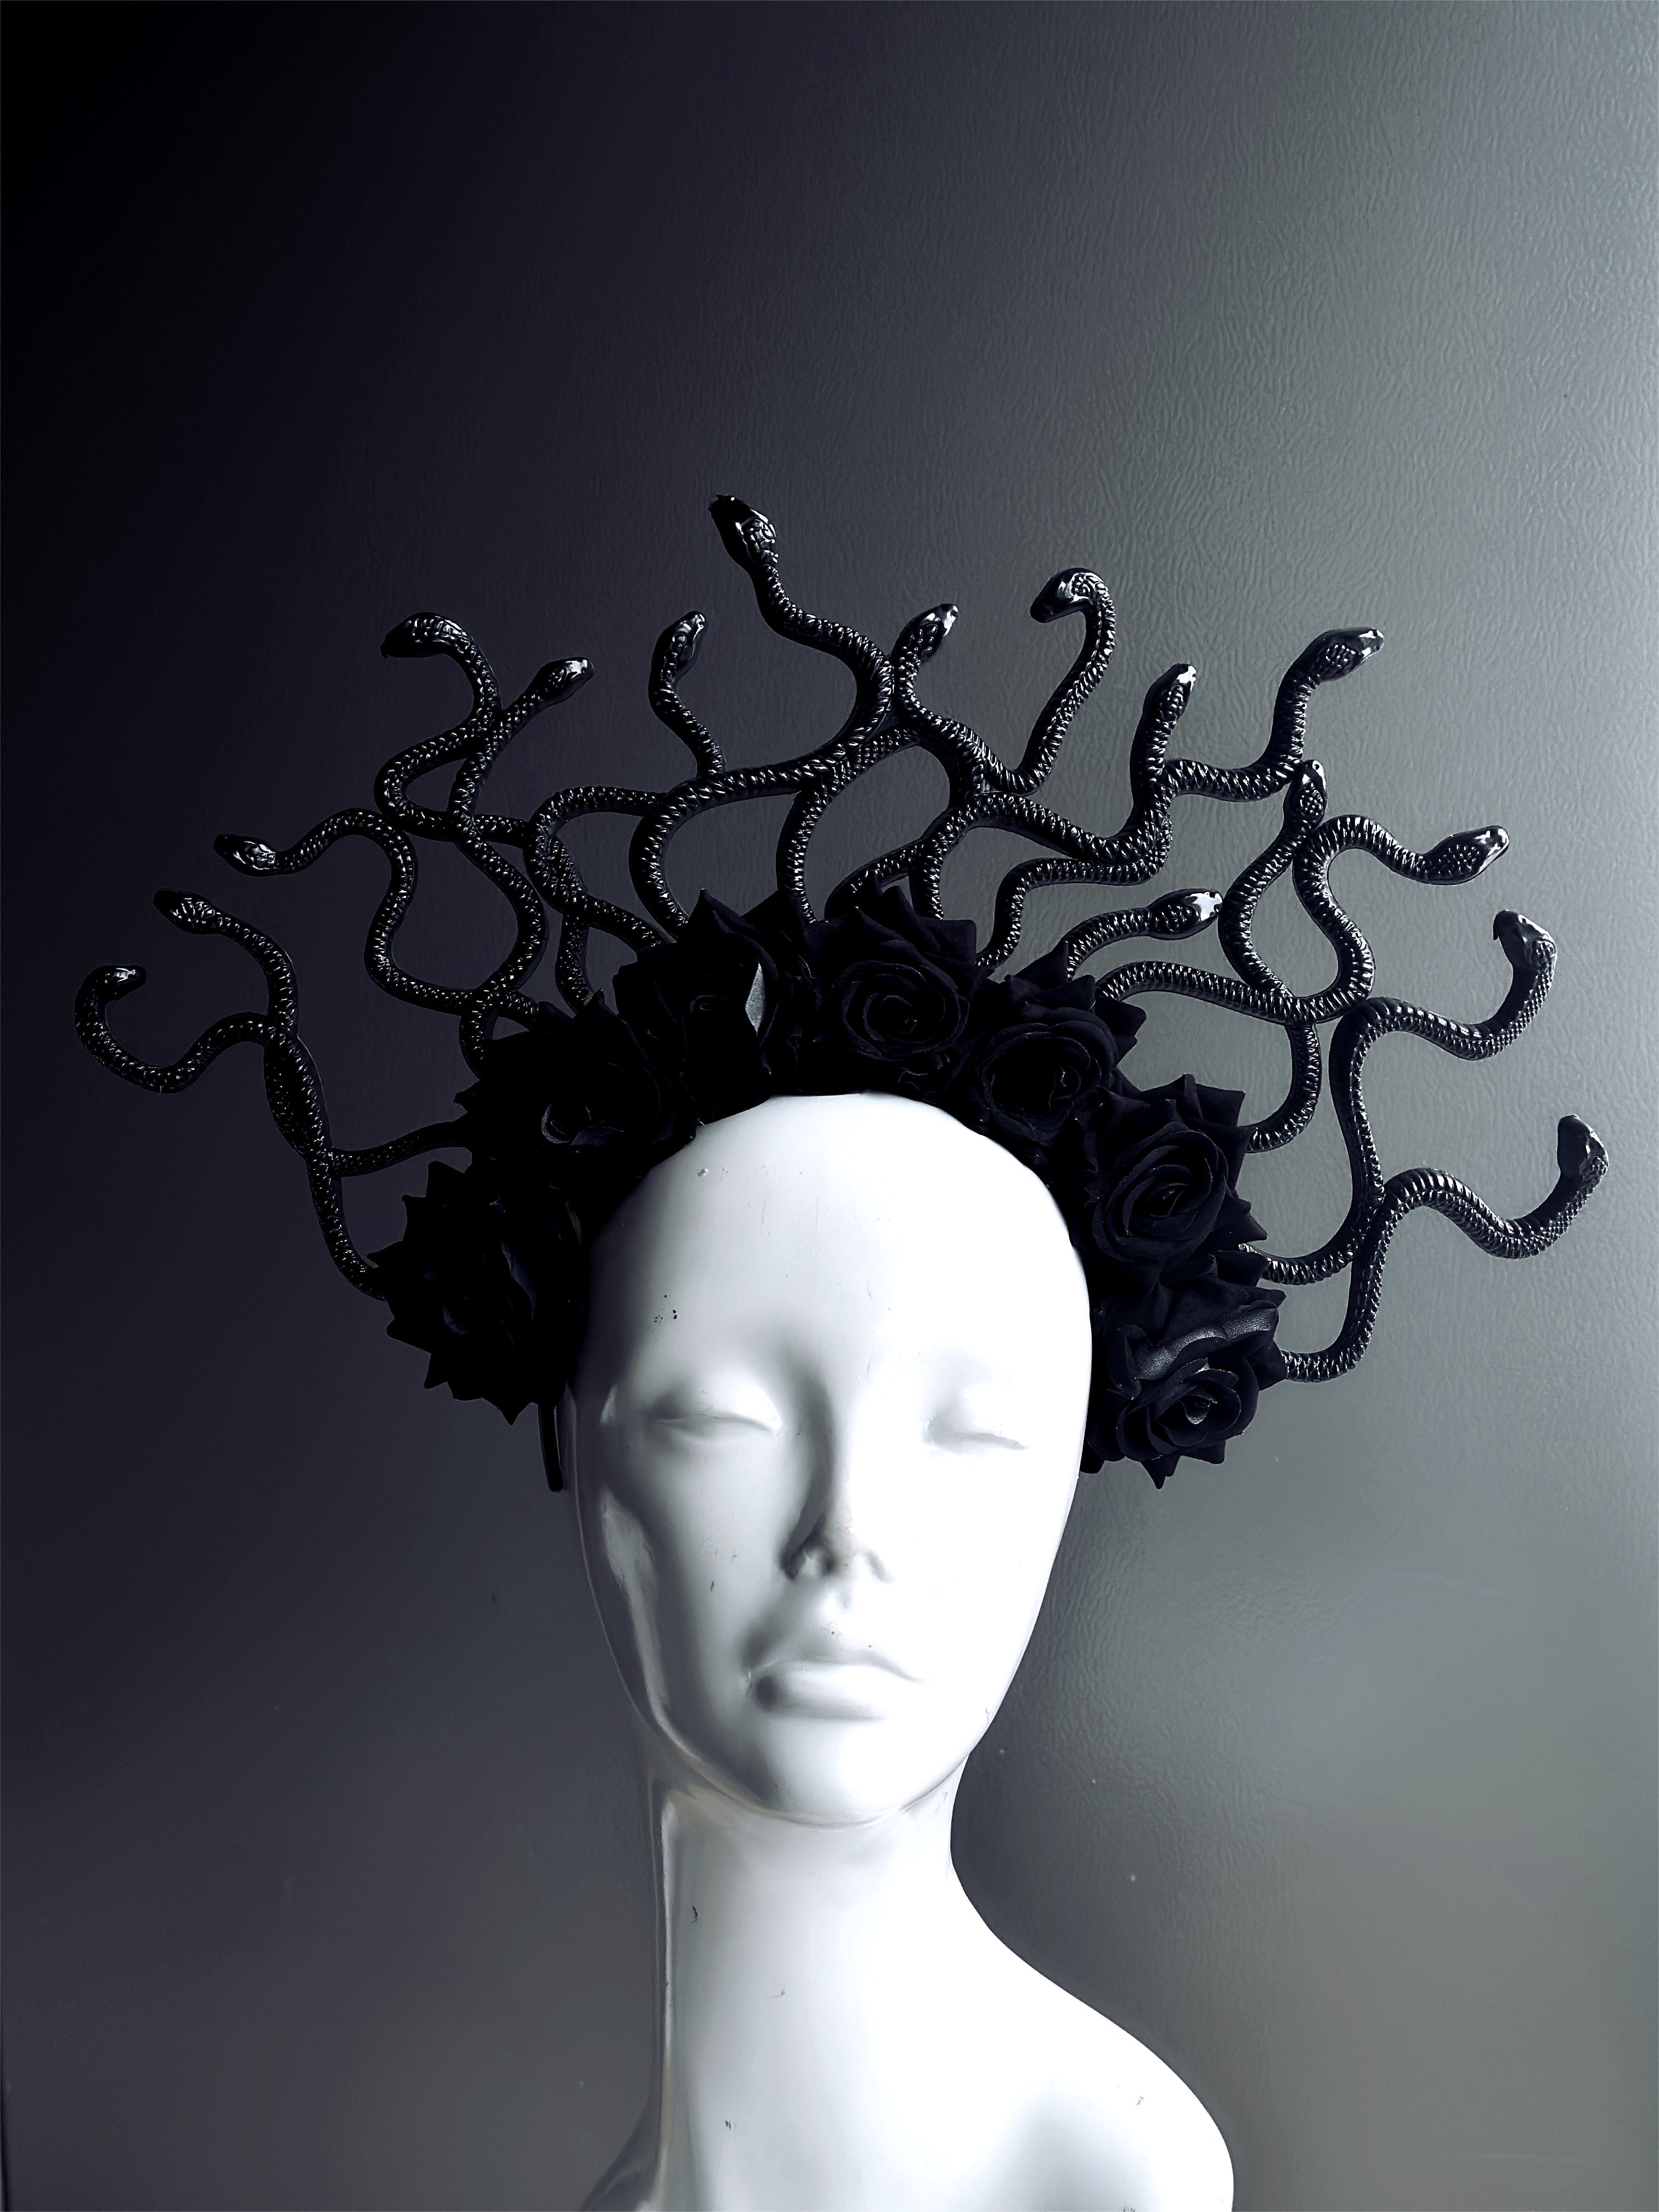 Medusa snake headpiece in black with black roses for sale.